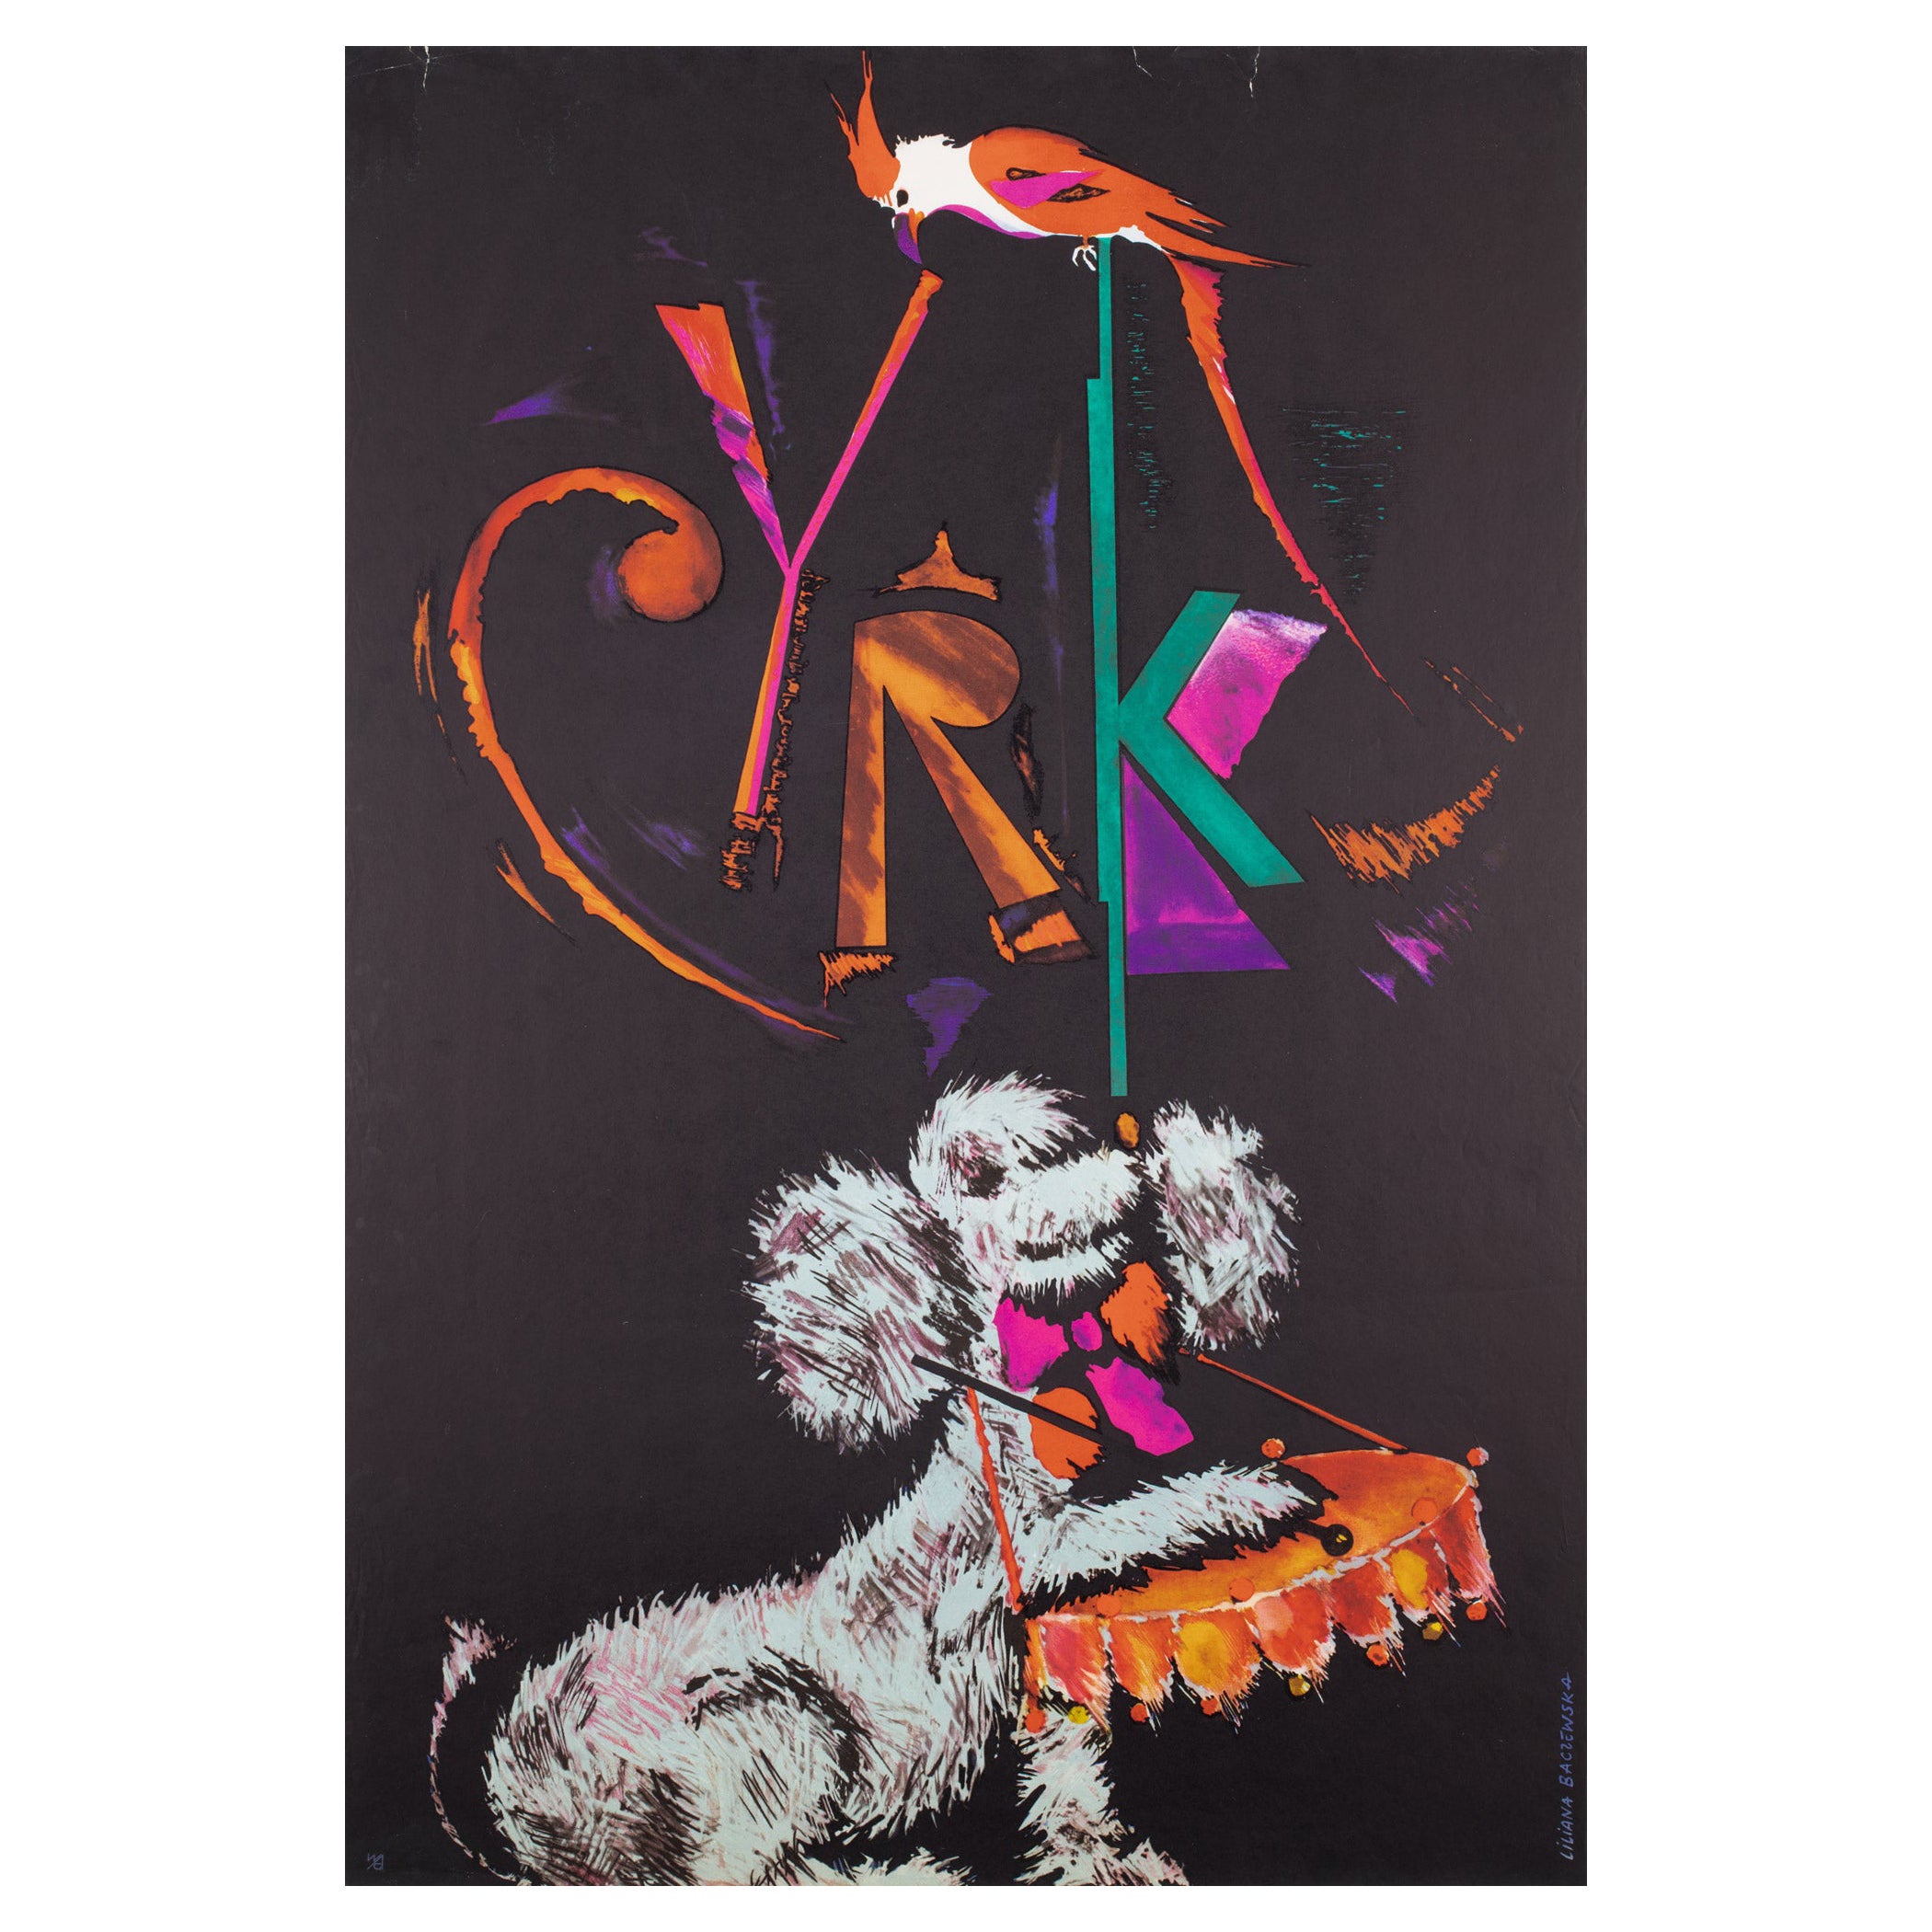 Affiche polonaise d'un cirque, caniche à tambour et perroquet, Cyrk, Baczewska, 1965